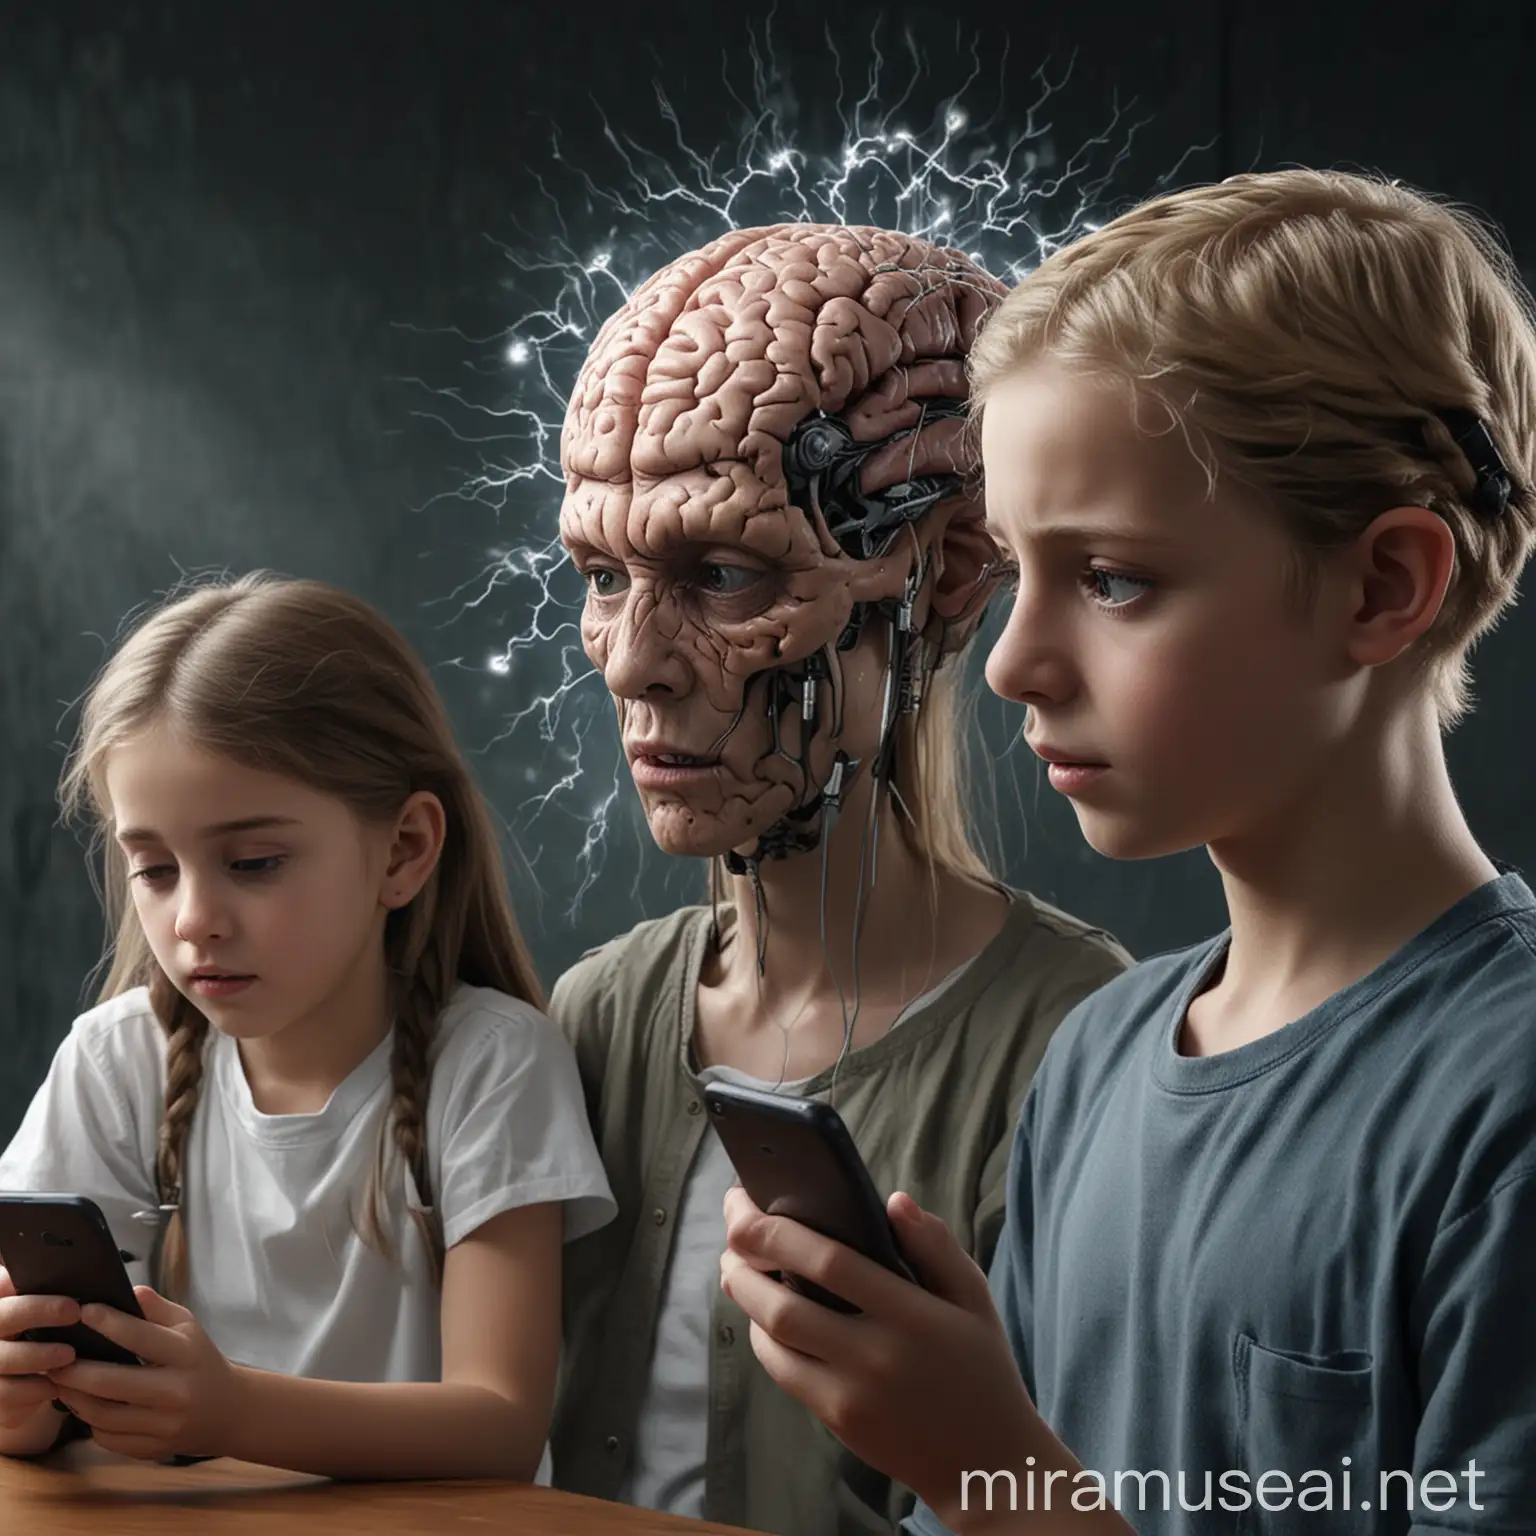 Children with Smartphone Brains Ignoring Surrounding Dangers